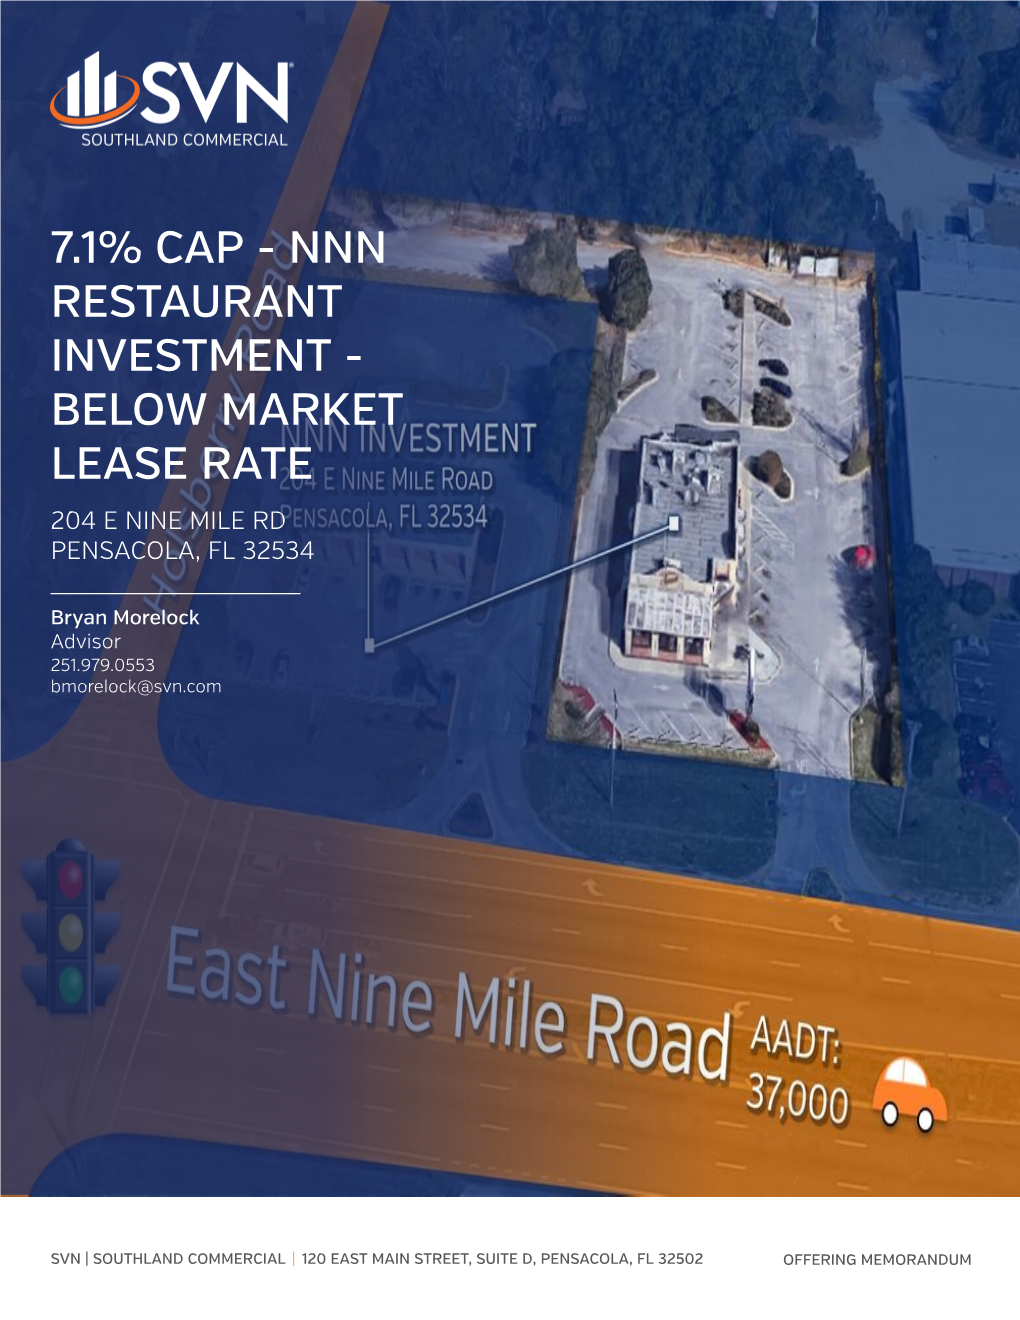 Nnn Restaurant Investment - Below Market Lease Rate 204 E Nine Mile Rd Pensacola, Fl 32534